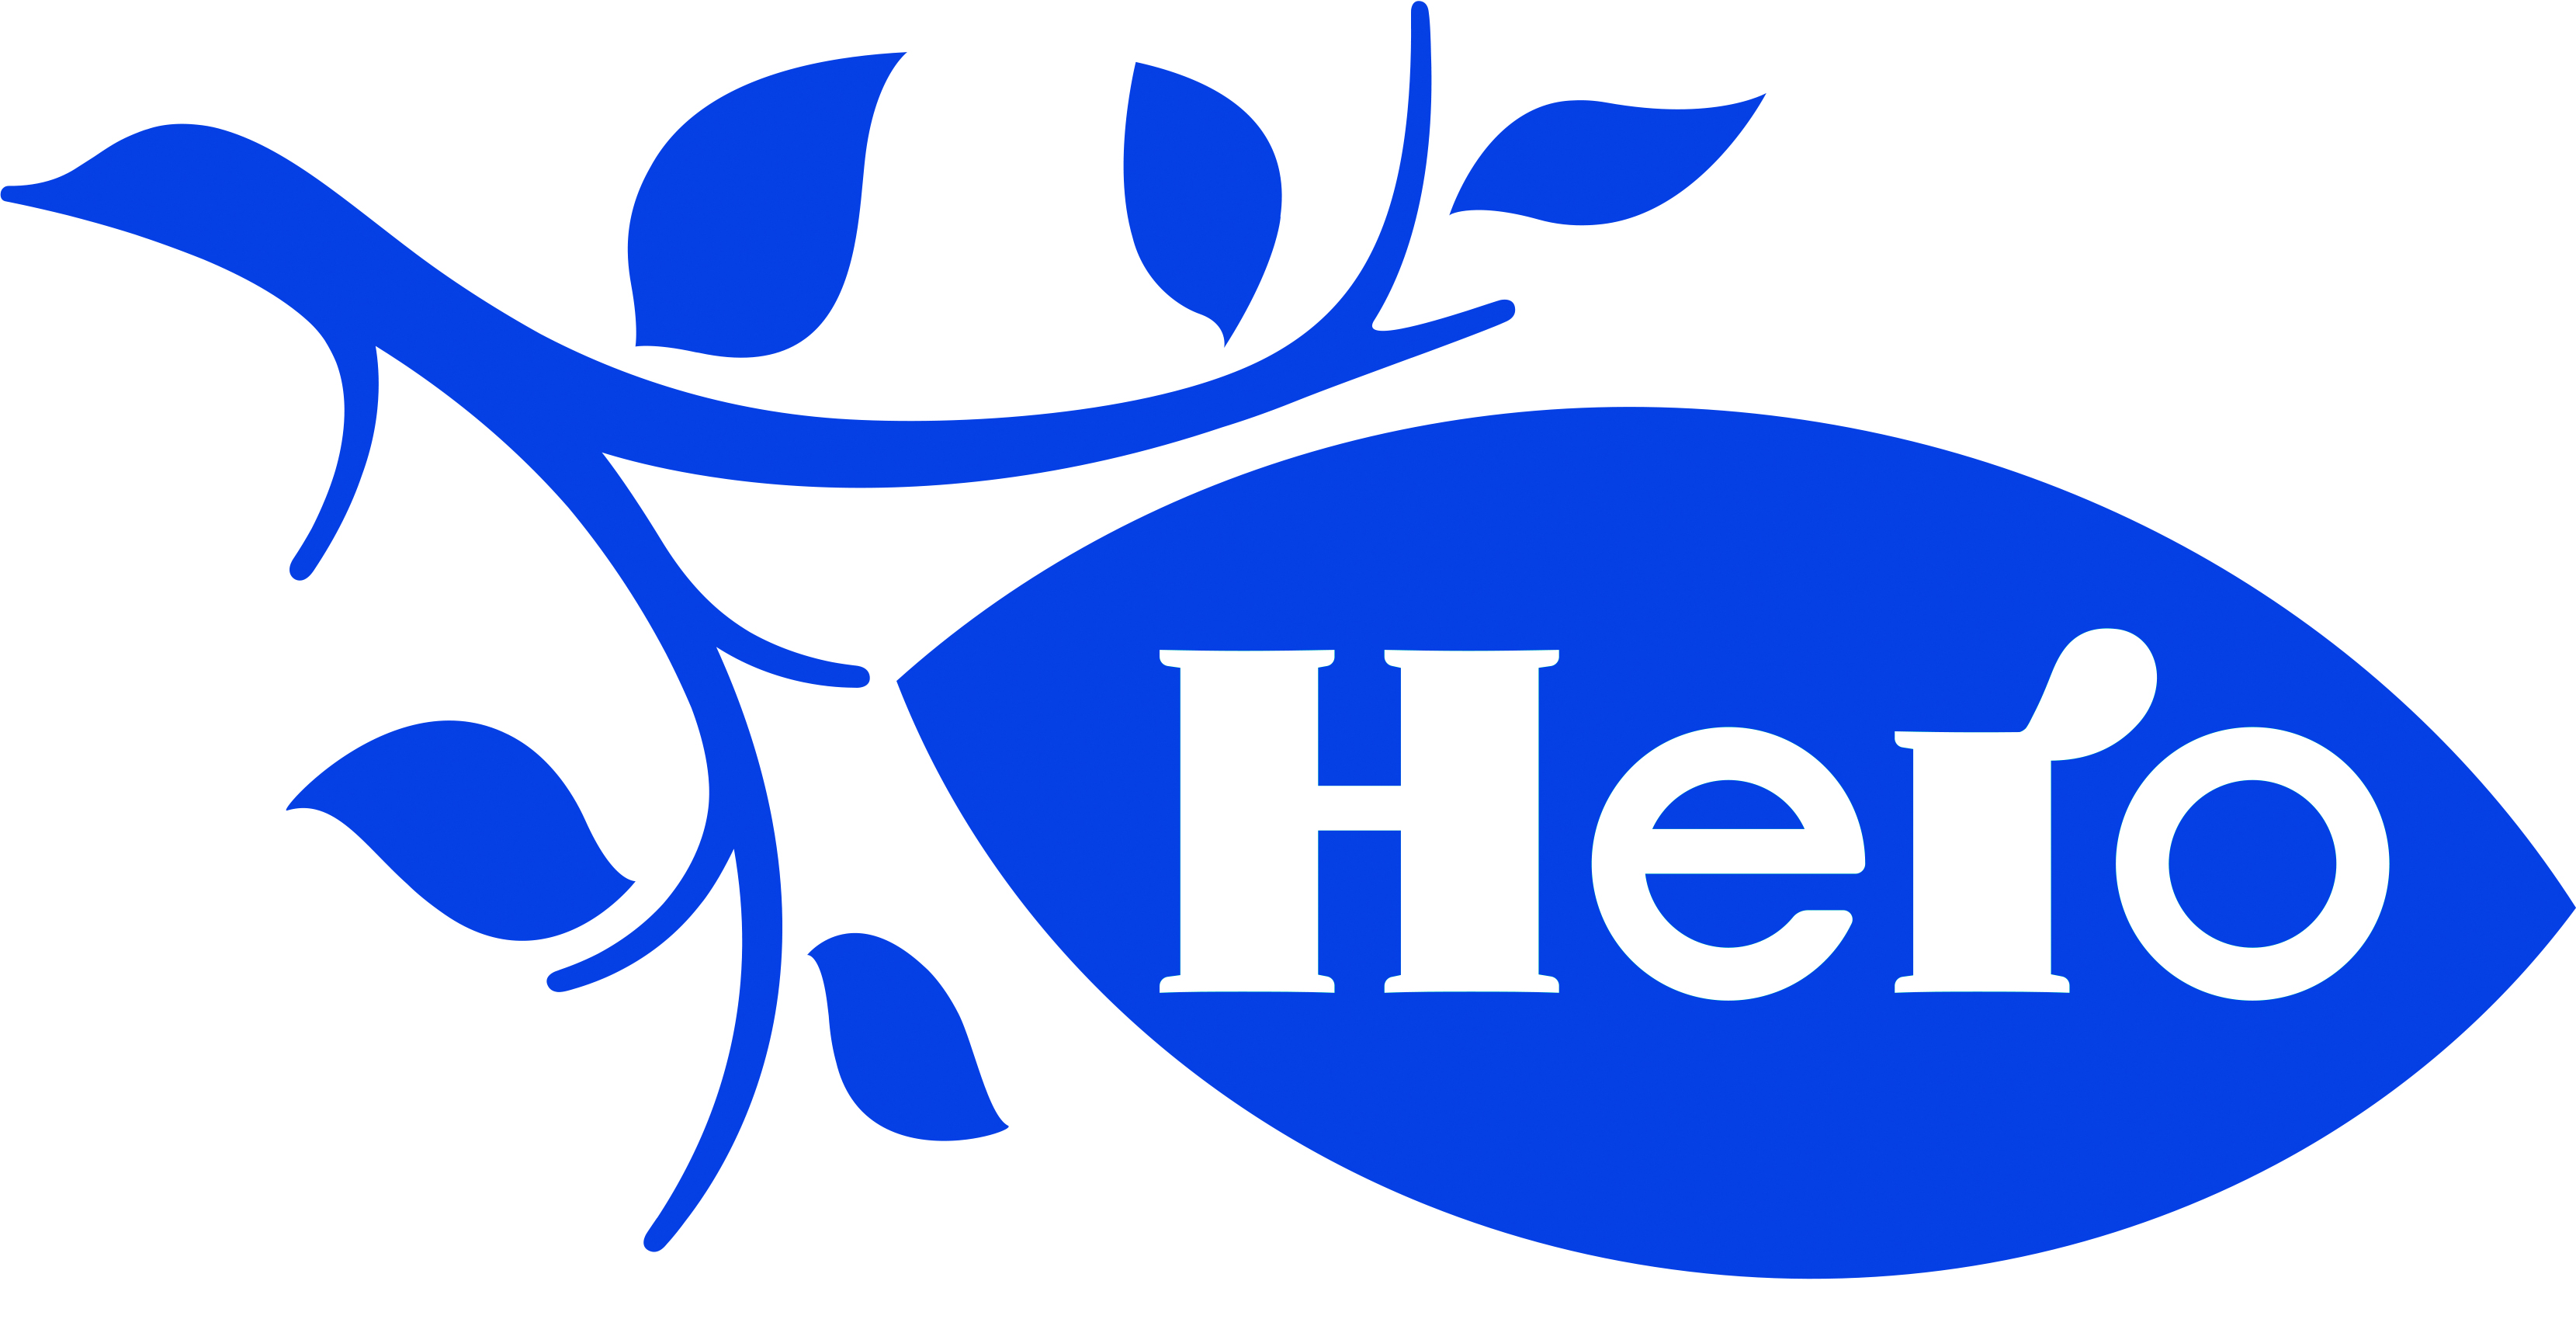 logo hero